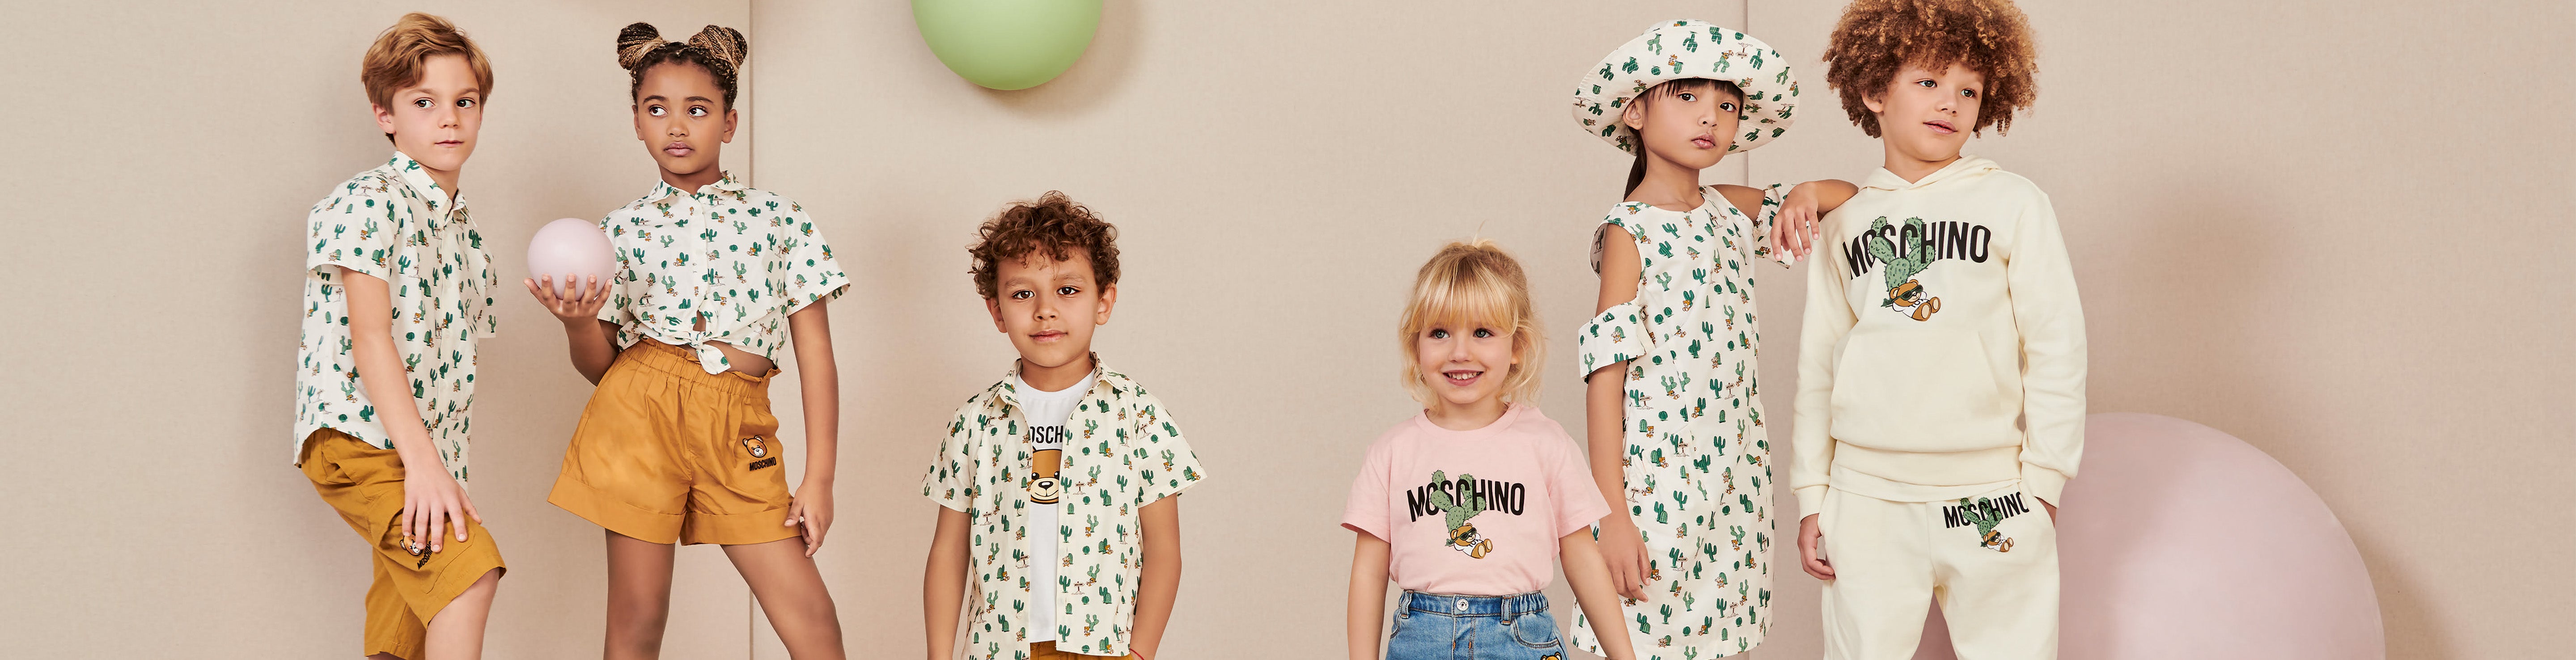 Moschino Kids Clothes | Childsplay Clothing